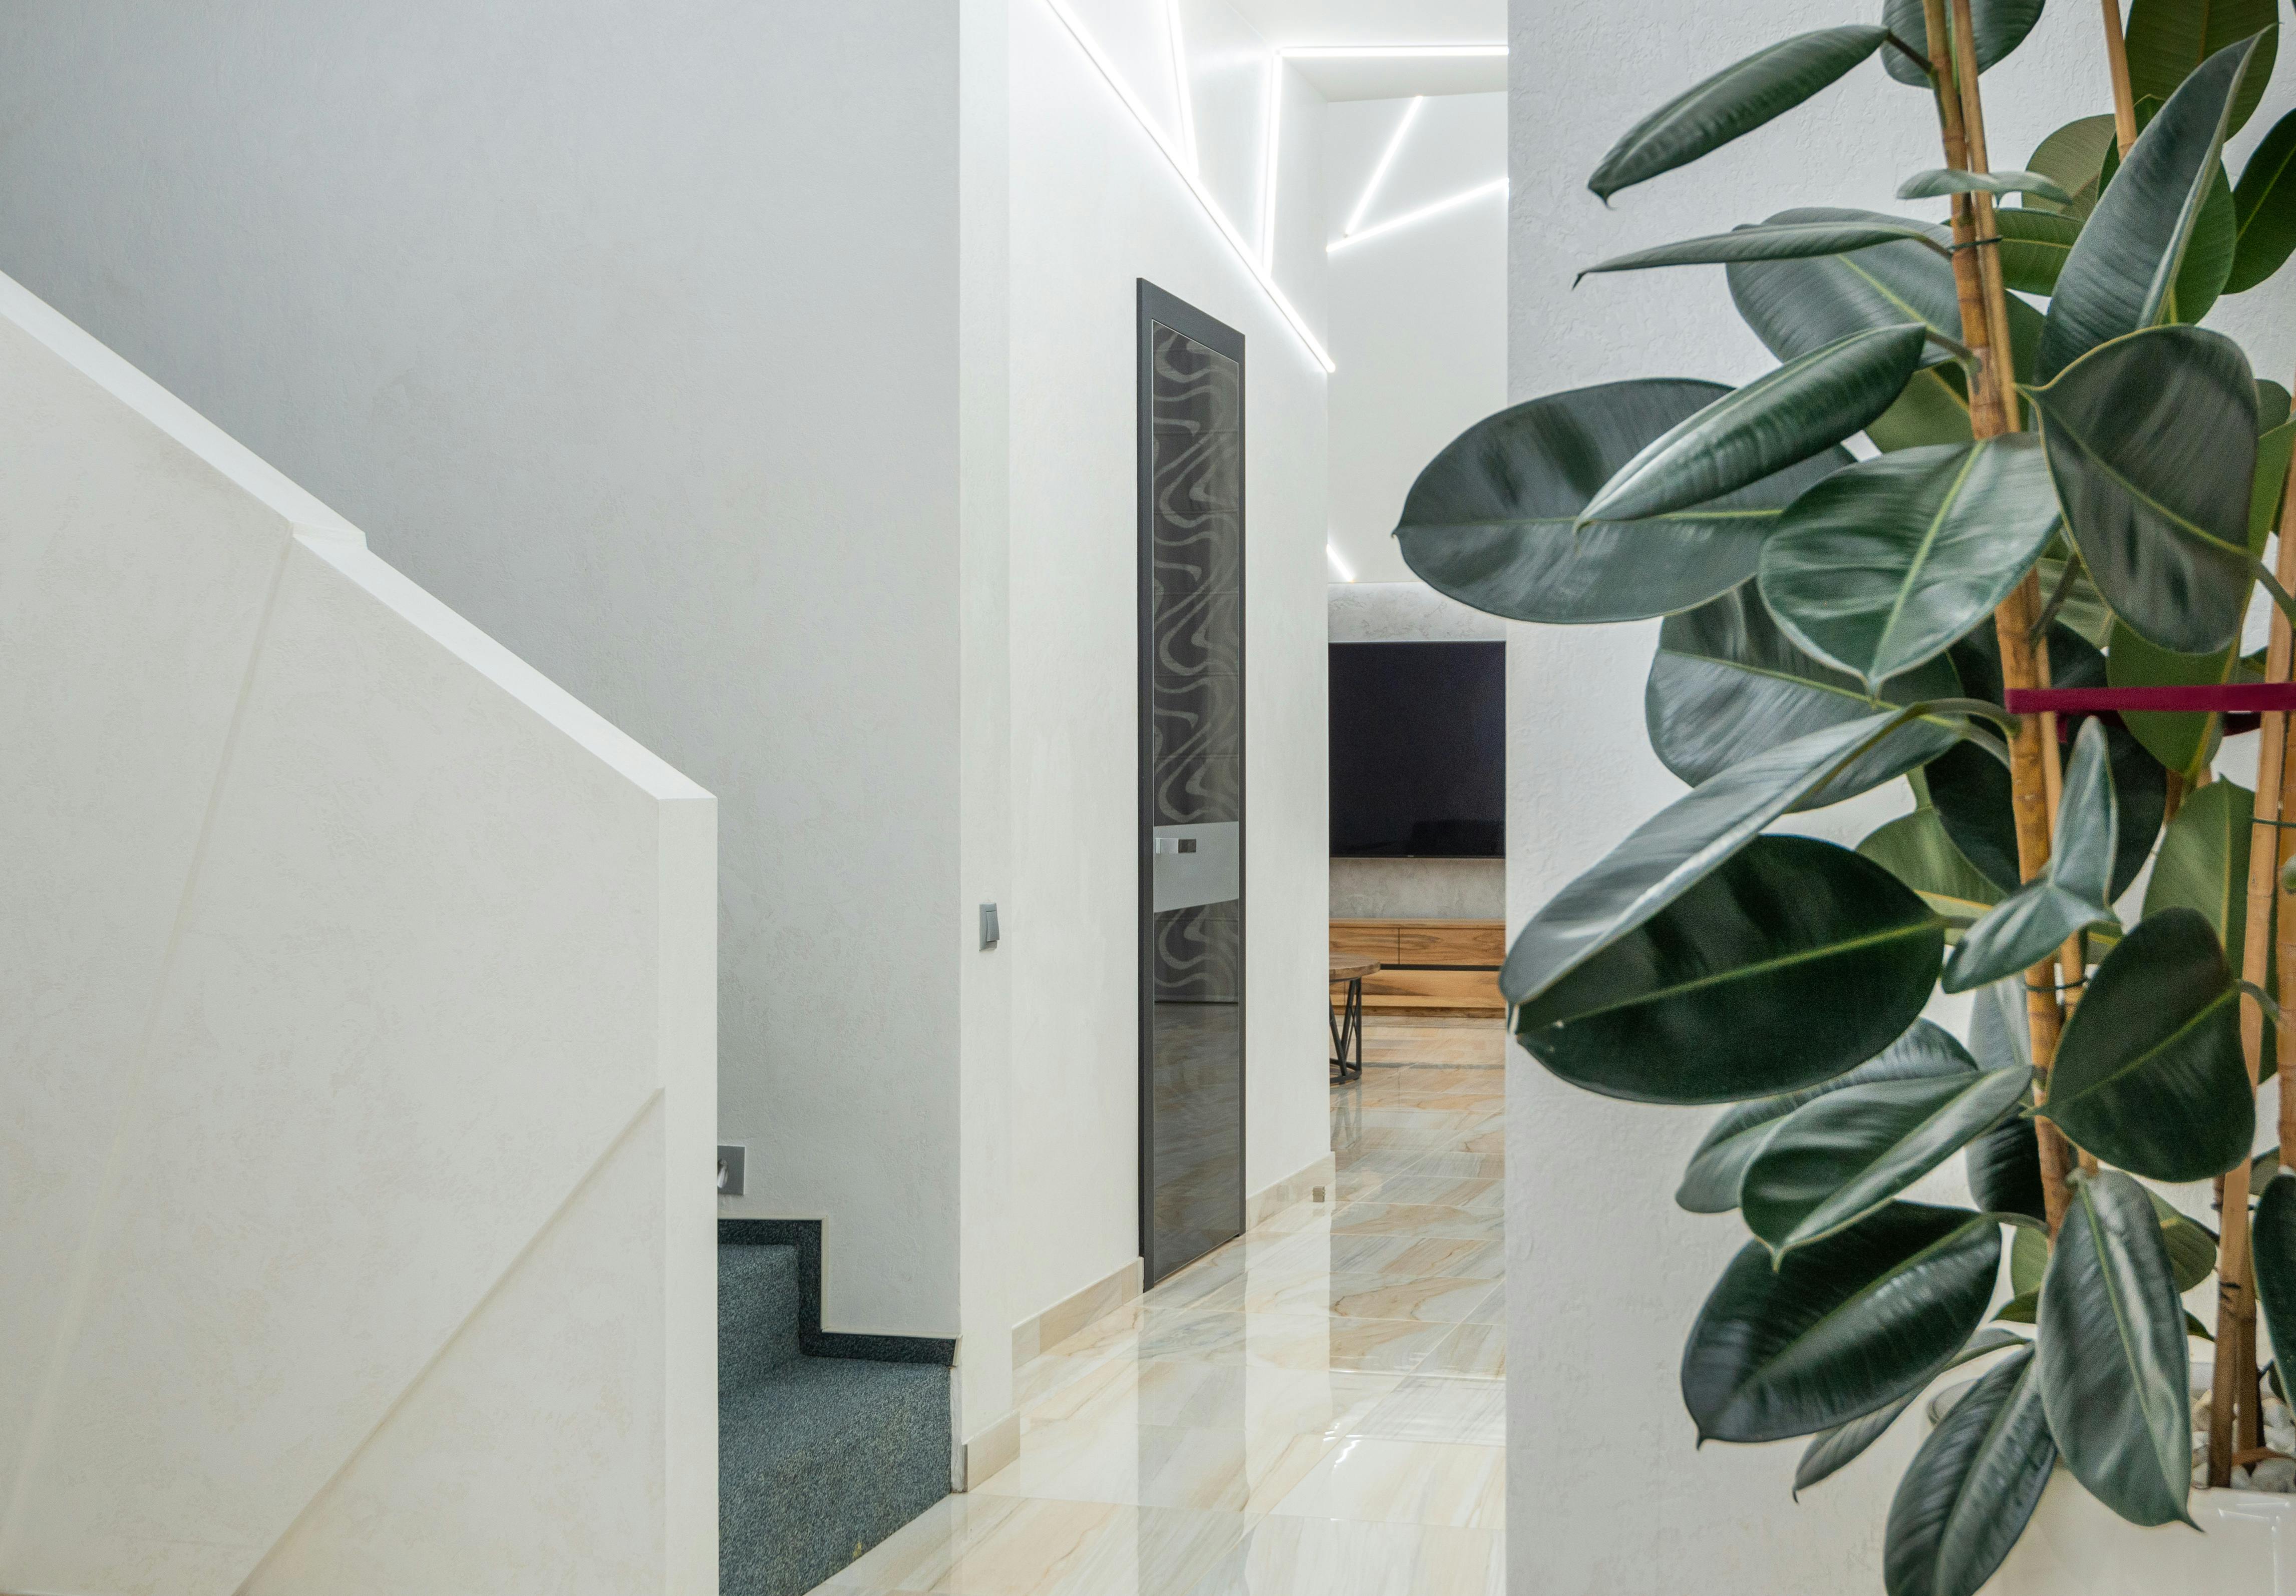 Potted Ficus elastica decorating light minimalist hallway of modern house